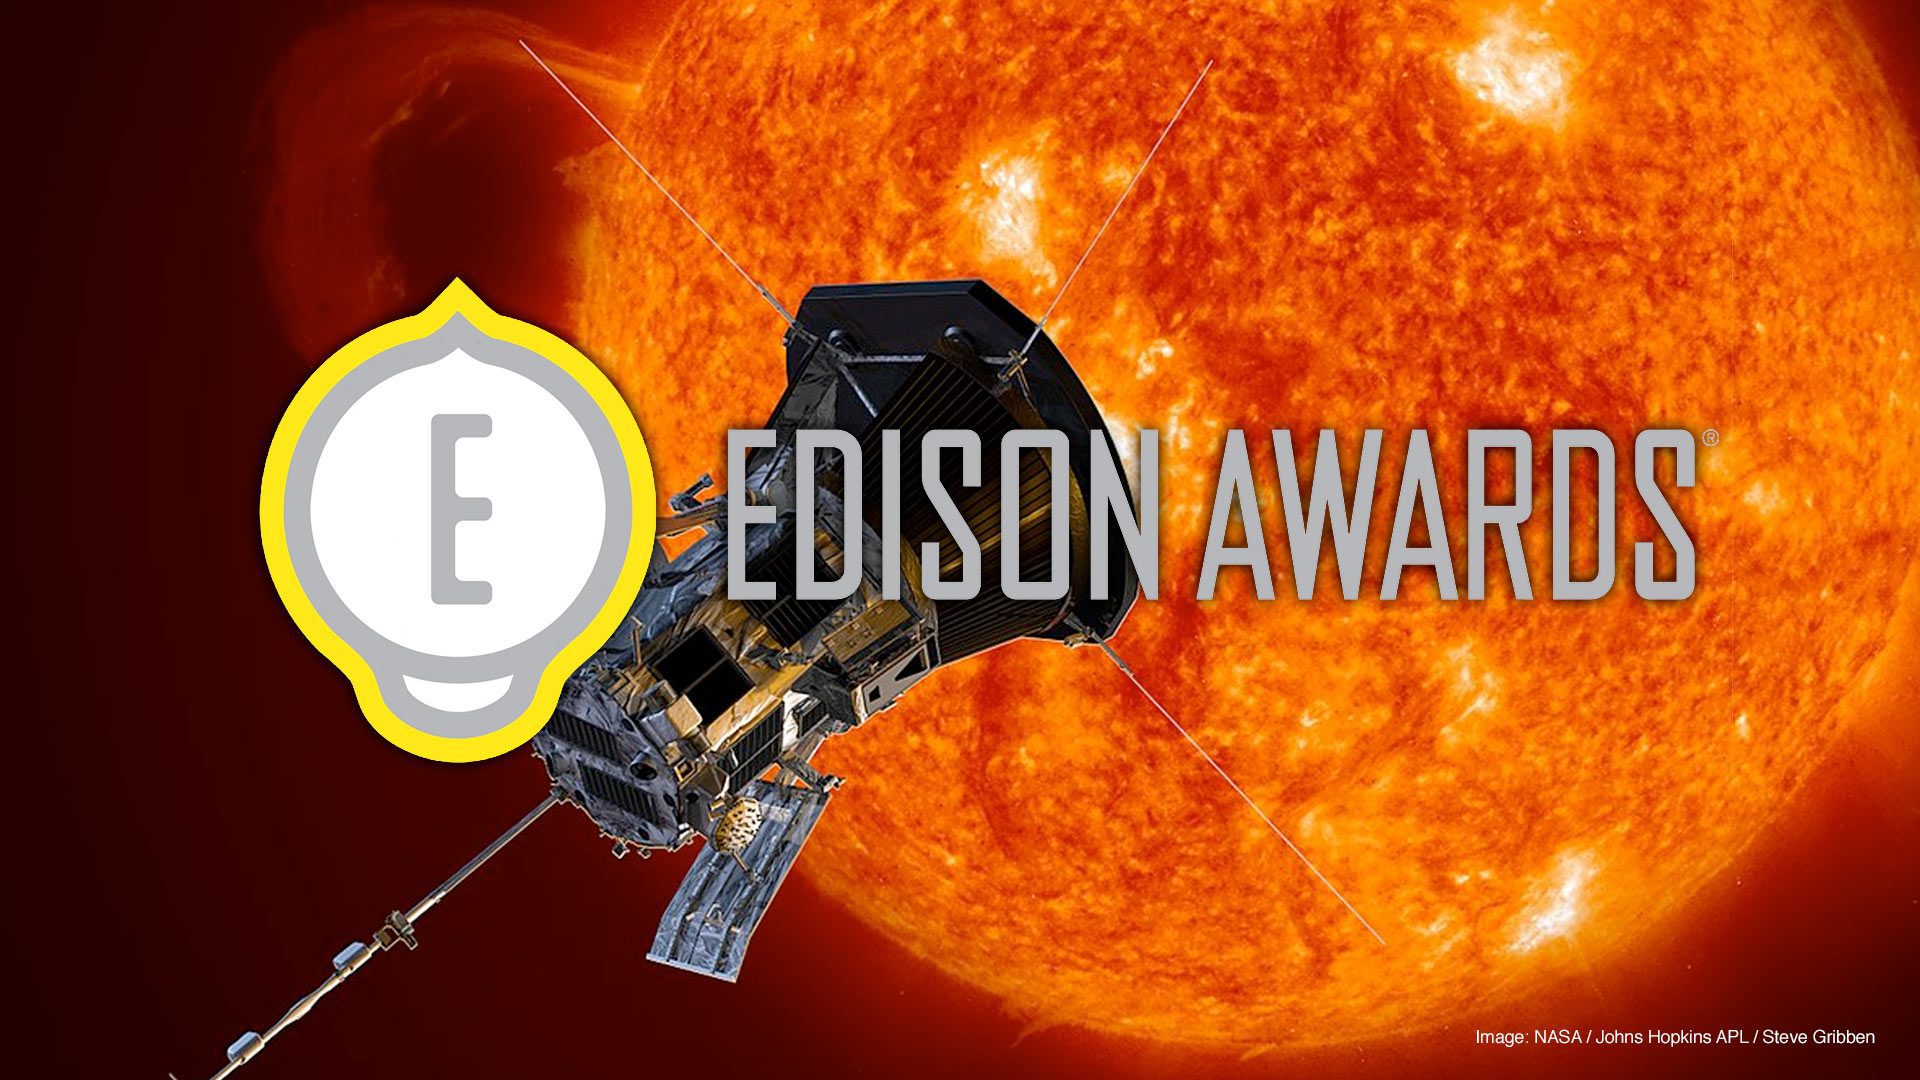 SRI International’s CMOS Imager Aboard the Parker Solar Probe Mission Named Gold Winner of the Edison Awards